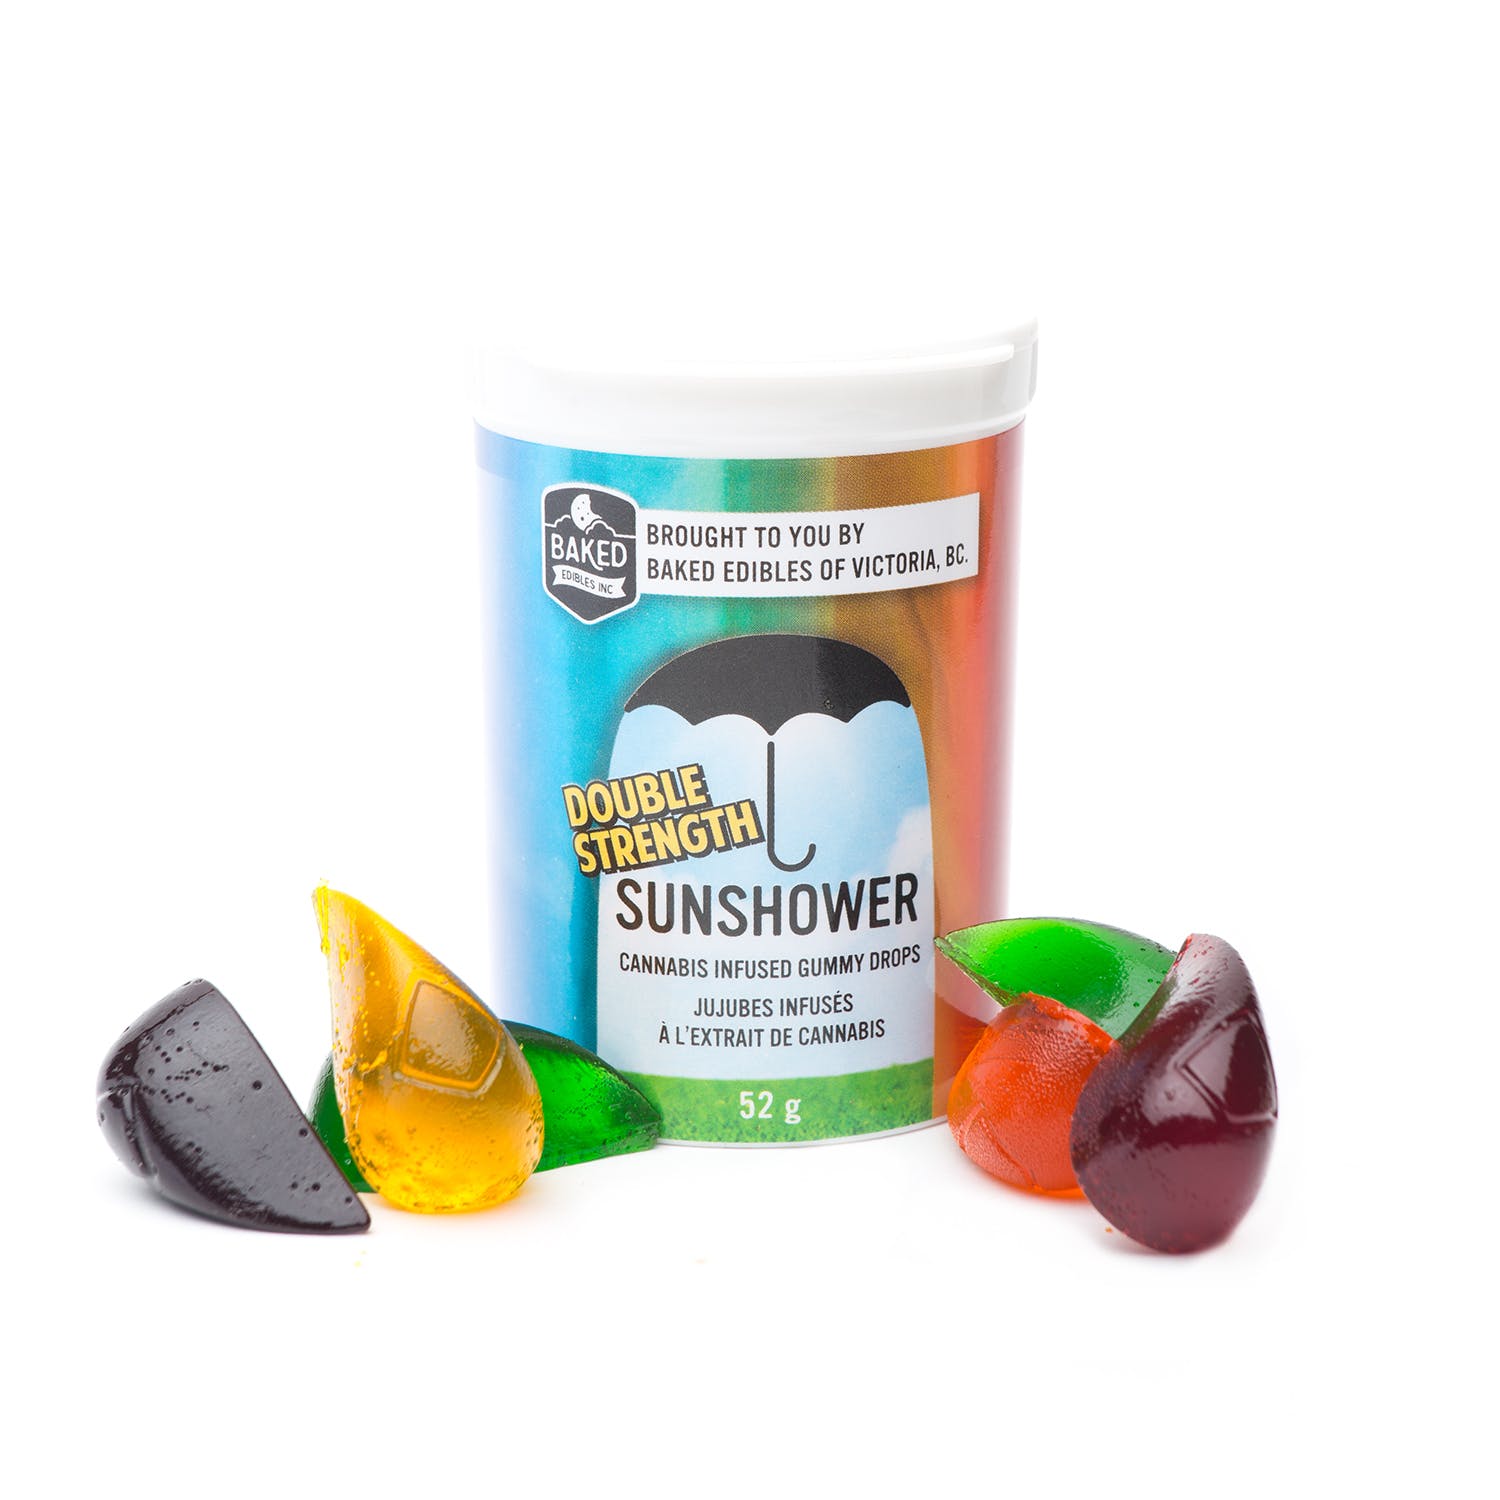 150mg THC Sunshower Gummies by Baked Edibles Inc.